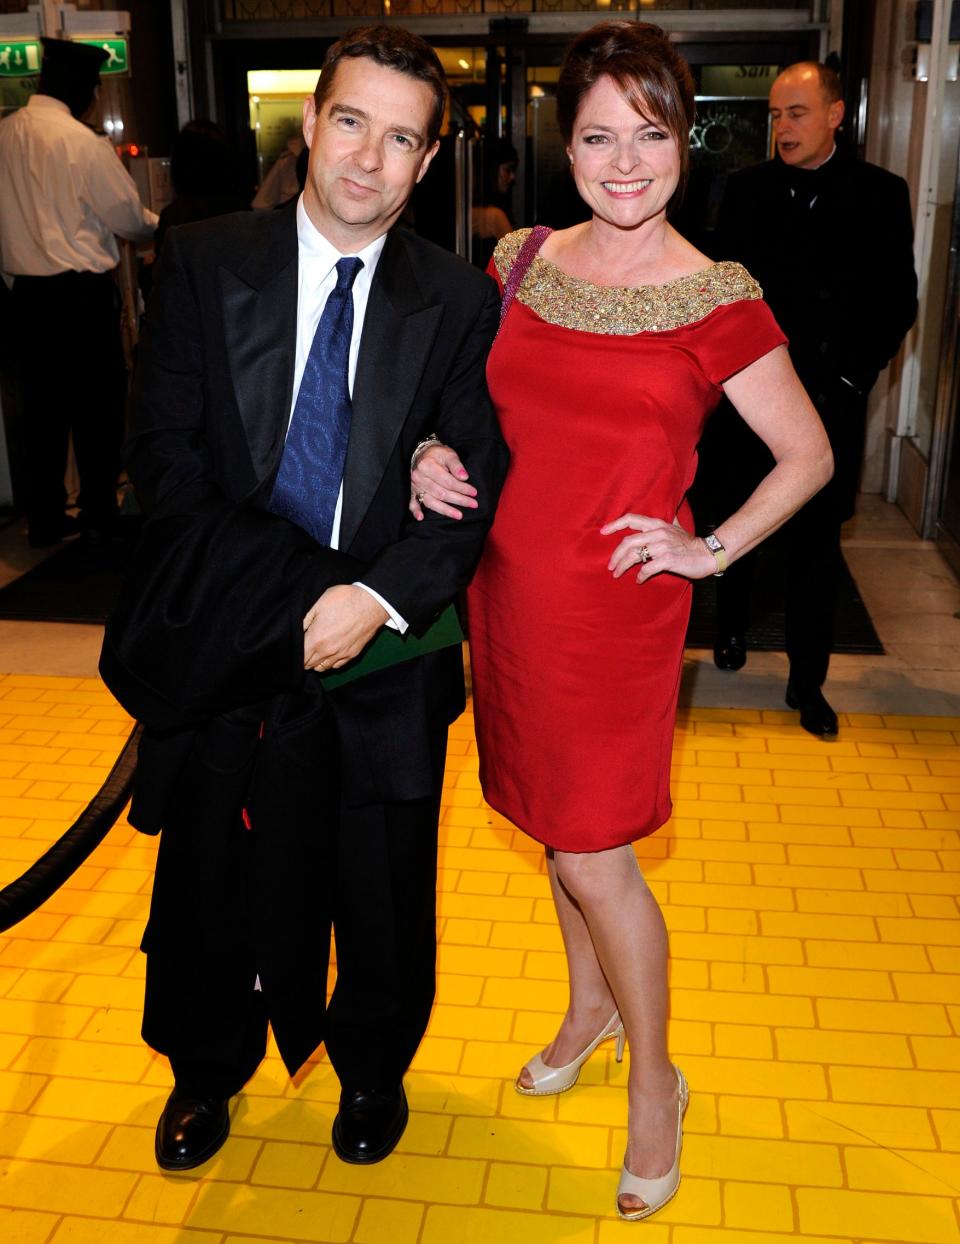 Janet Ellis and John Leach in 2009